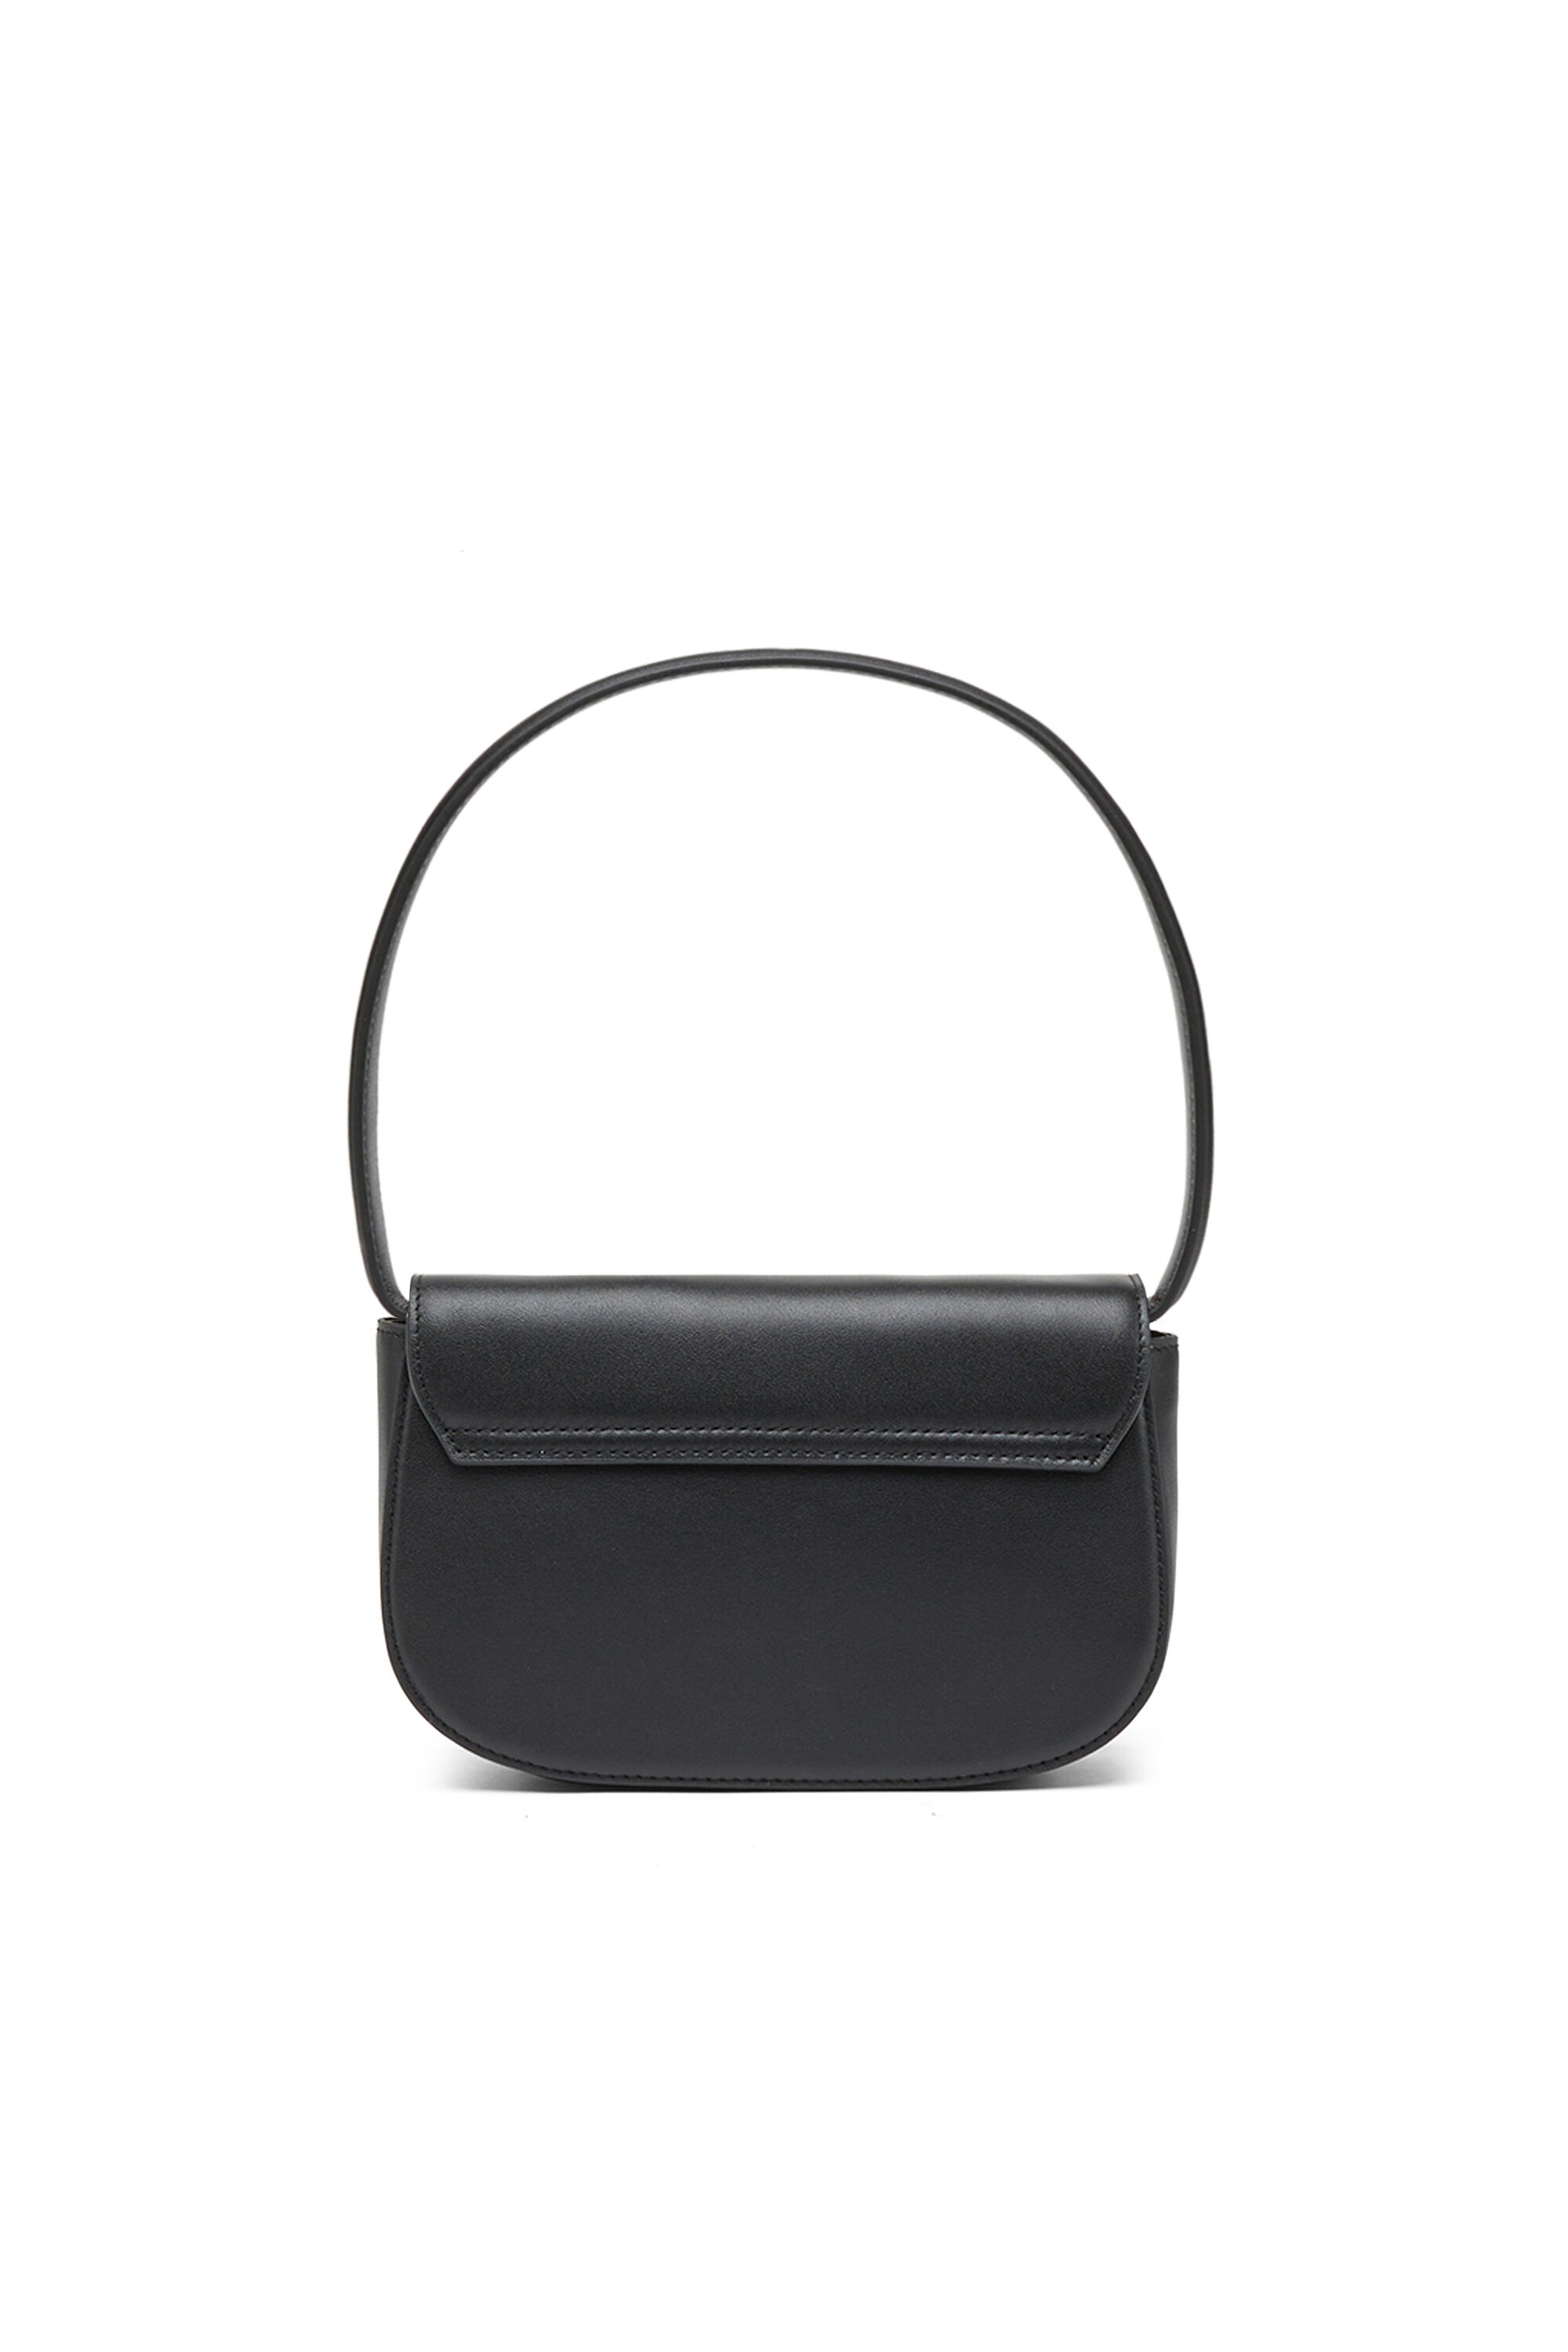 New stylish design Primium looking Women handbag 2 Compartment, Ladies  Purse Handbag